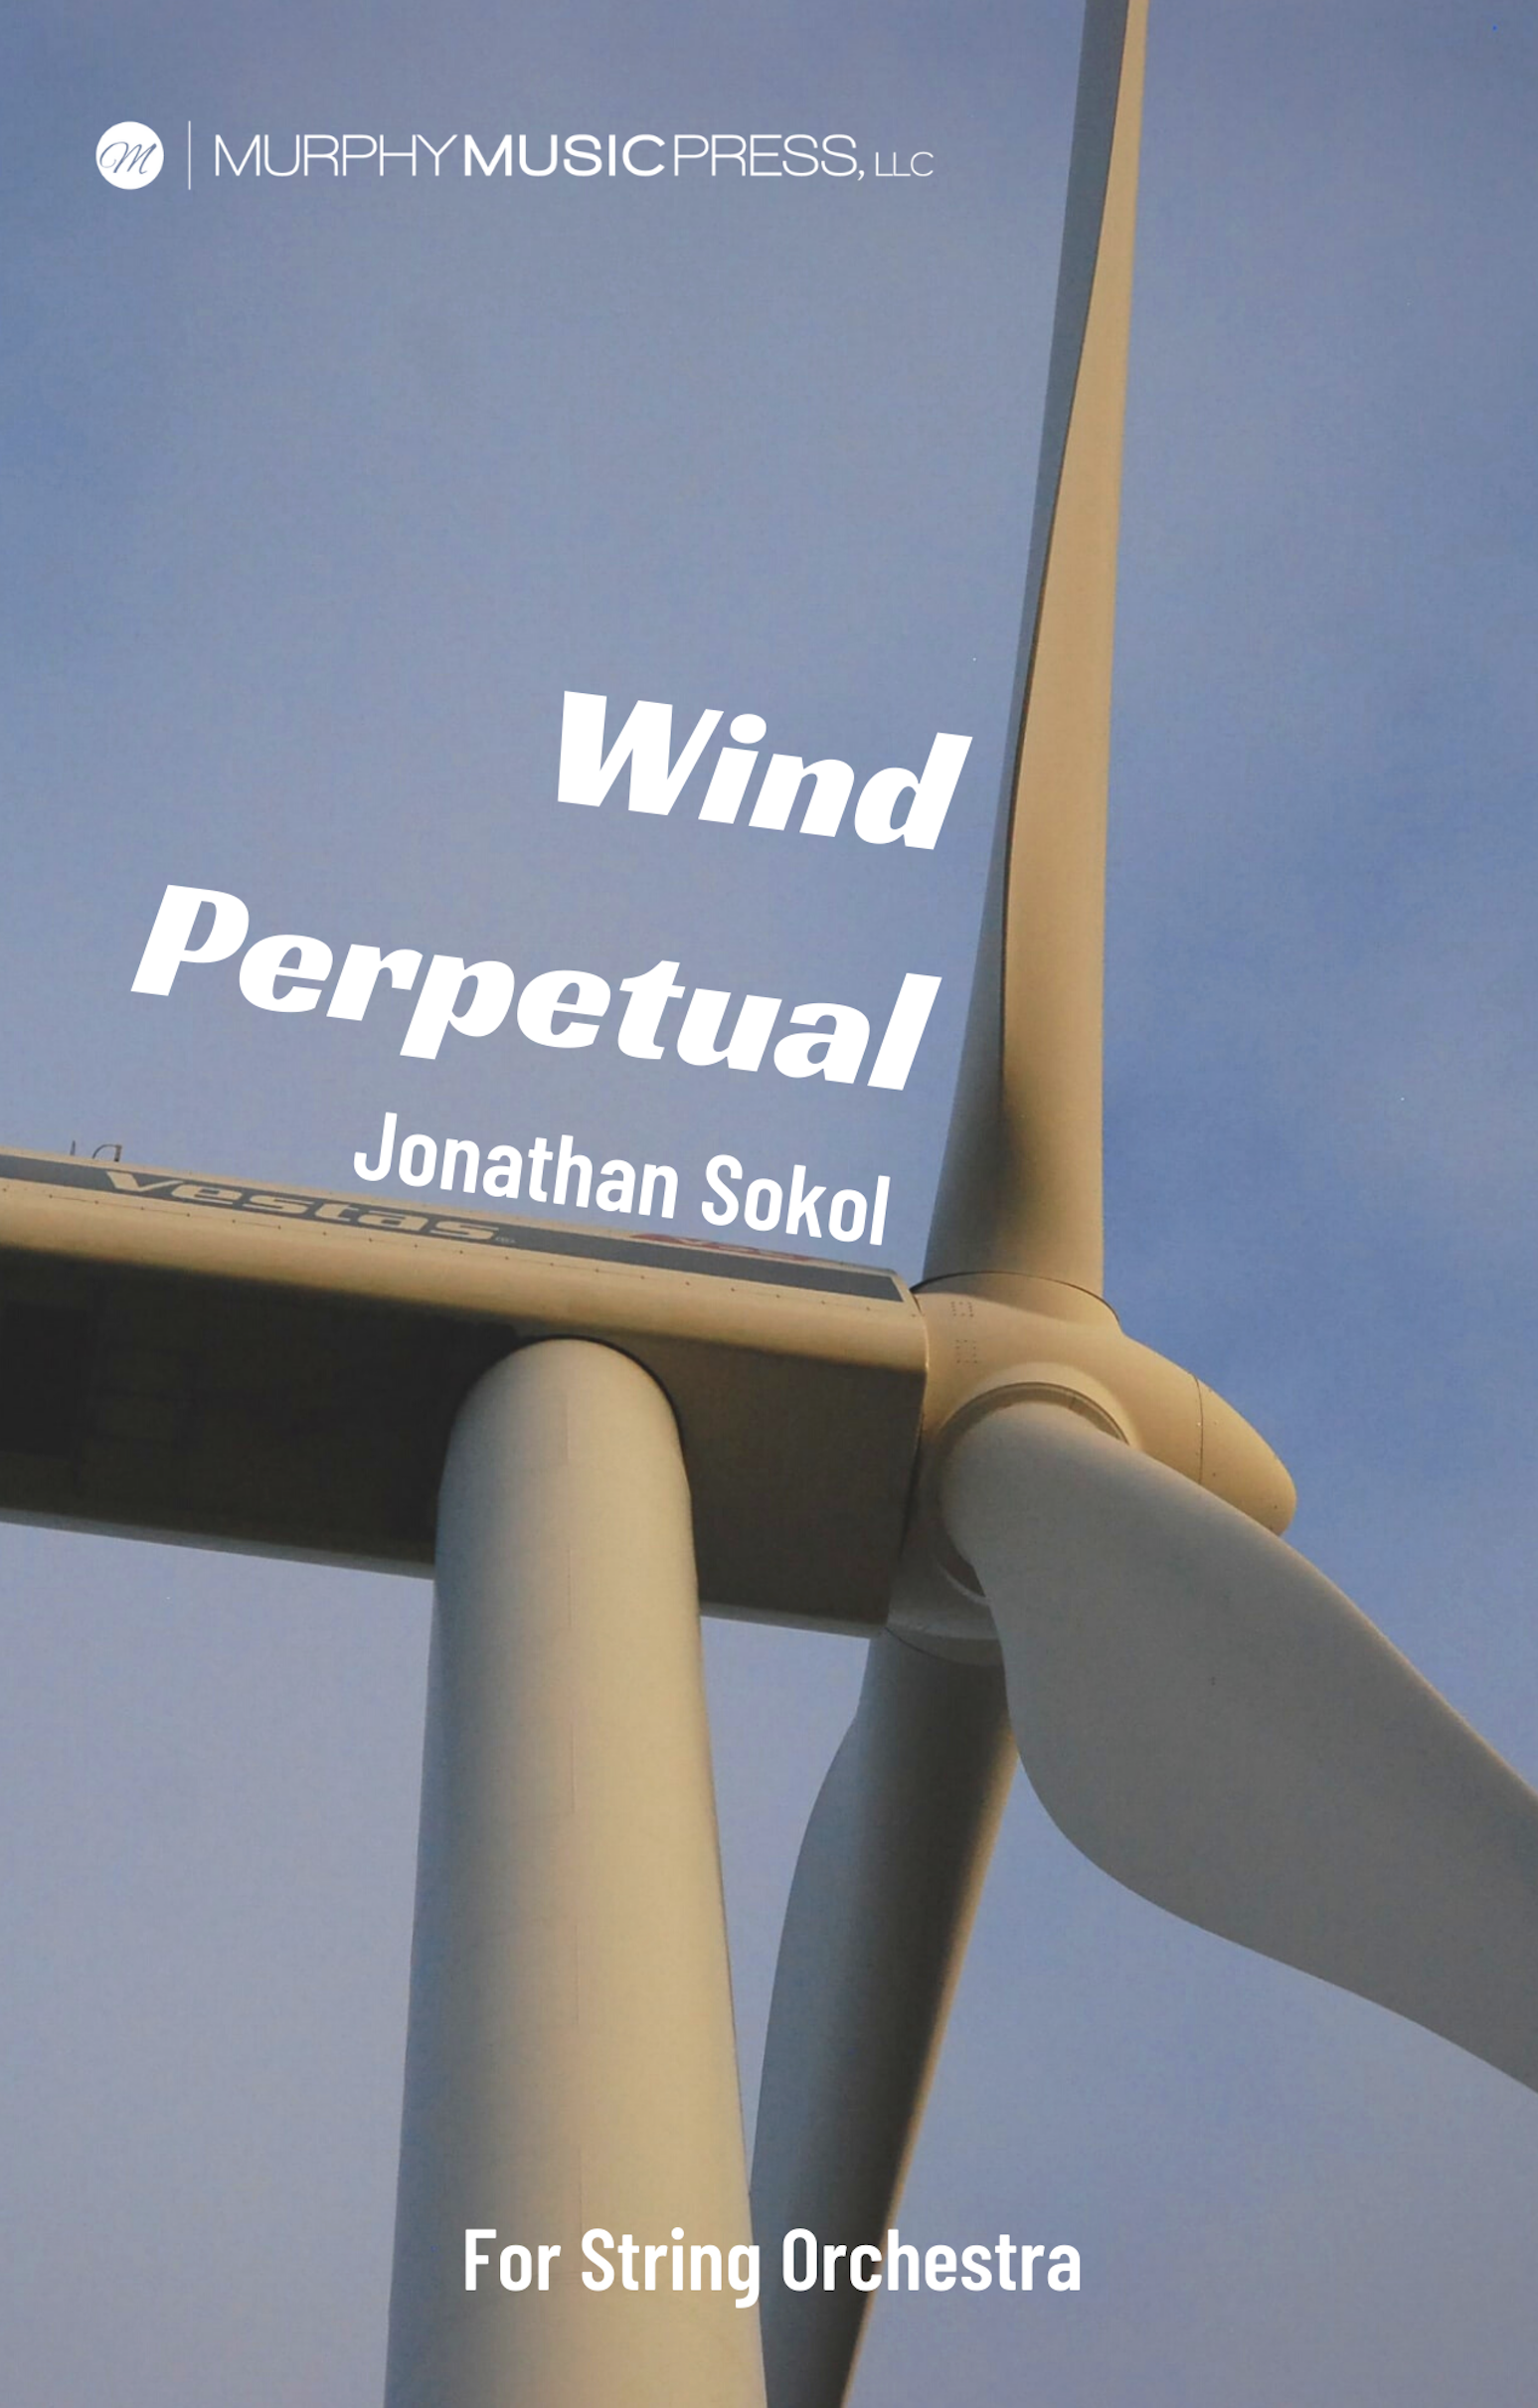 Wind Perpetual by Jonathan Sokol